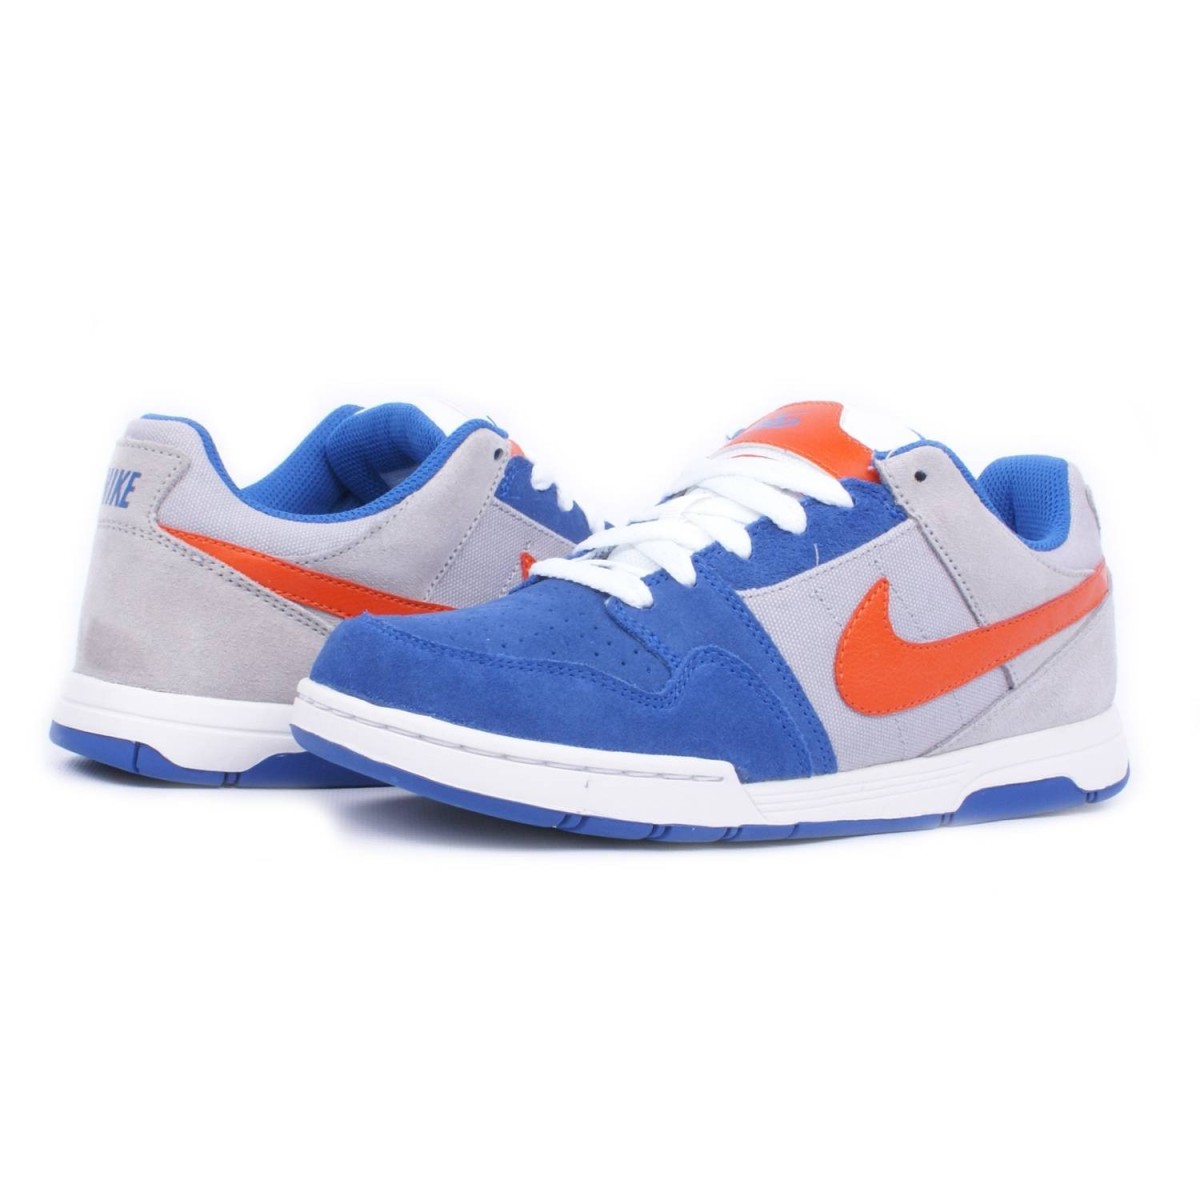 Footwear Nike MOGAN 2 JR 018 color wolf grey/tm orange-vrsty ryl